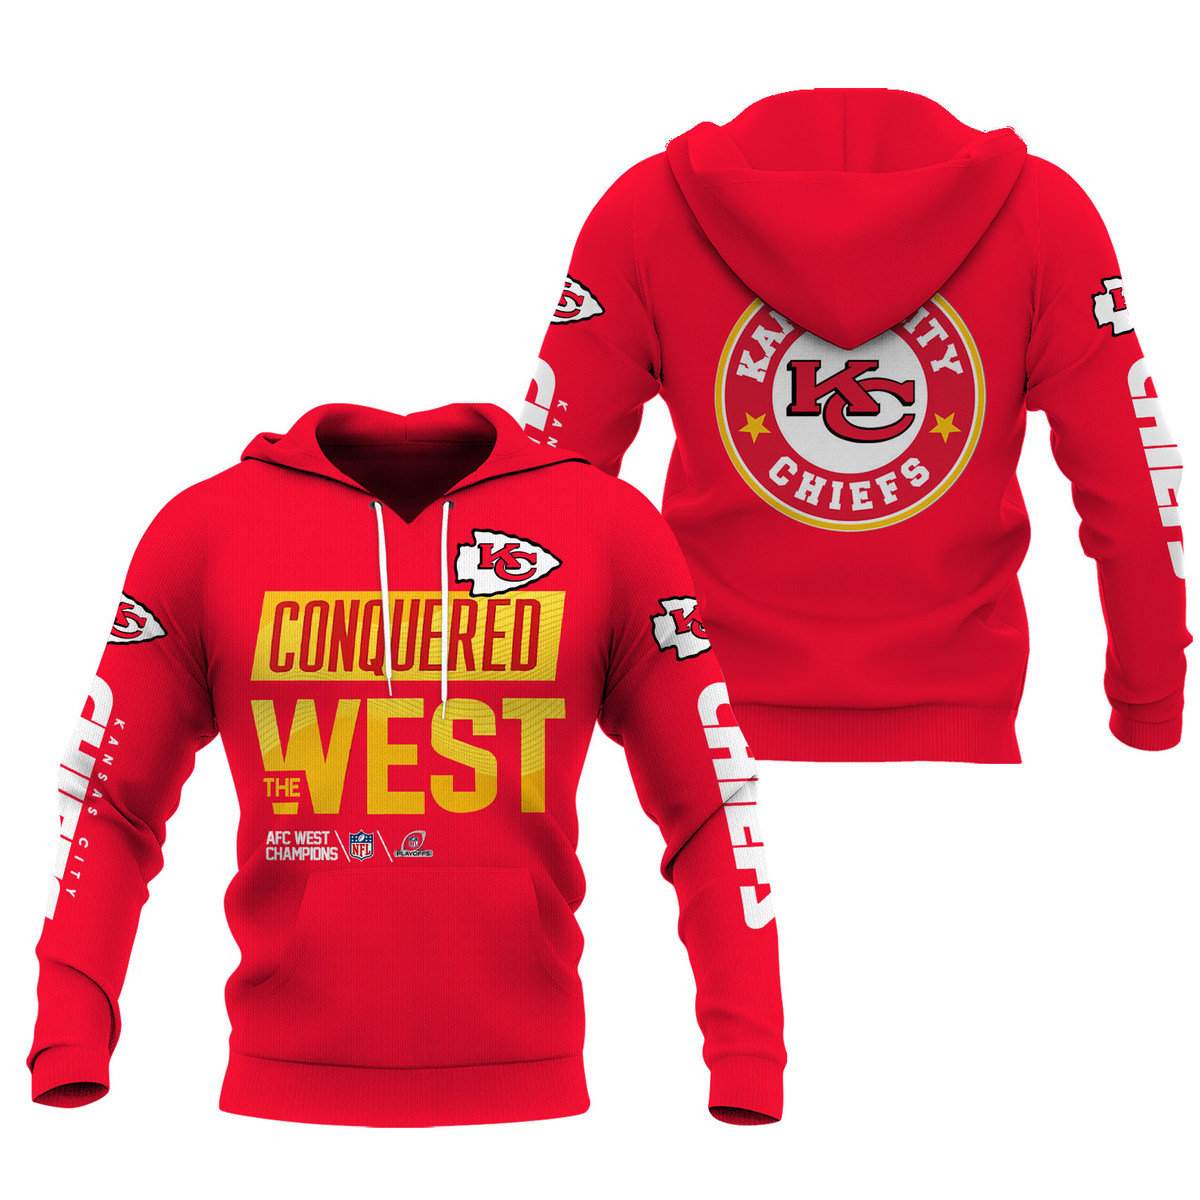 afc west champions gear